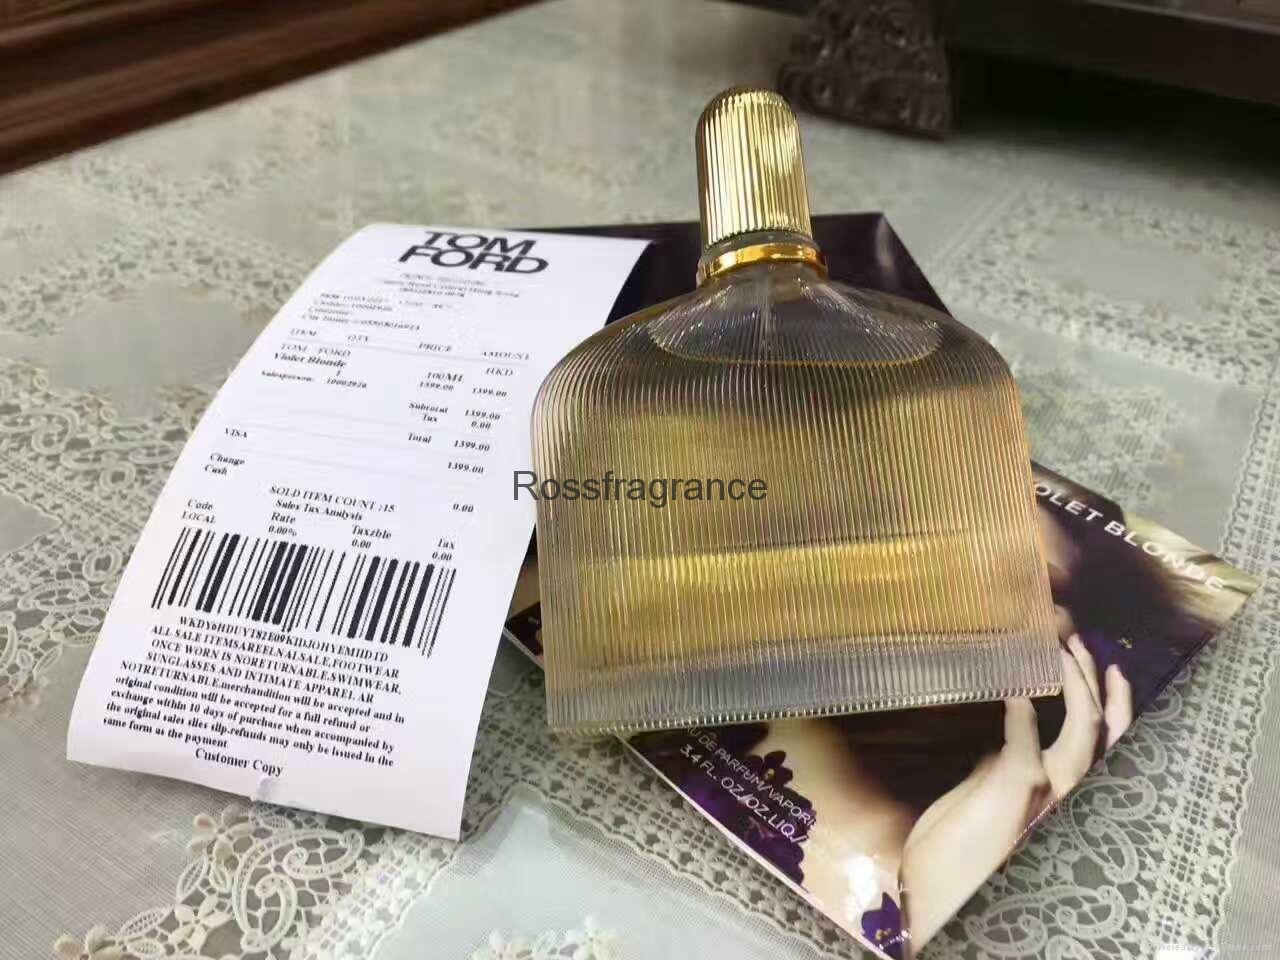 Hot sale Perfume crystal bottle Tom ford  perfume 100ml  2